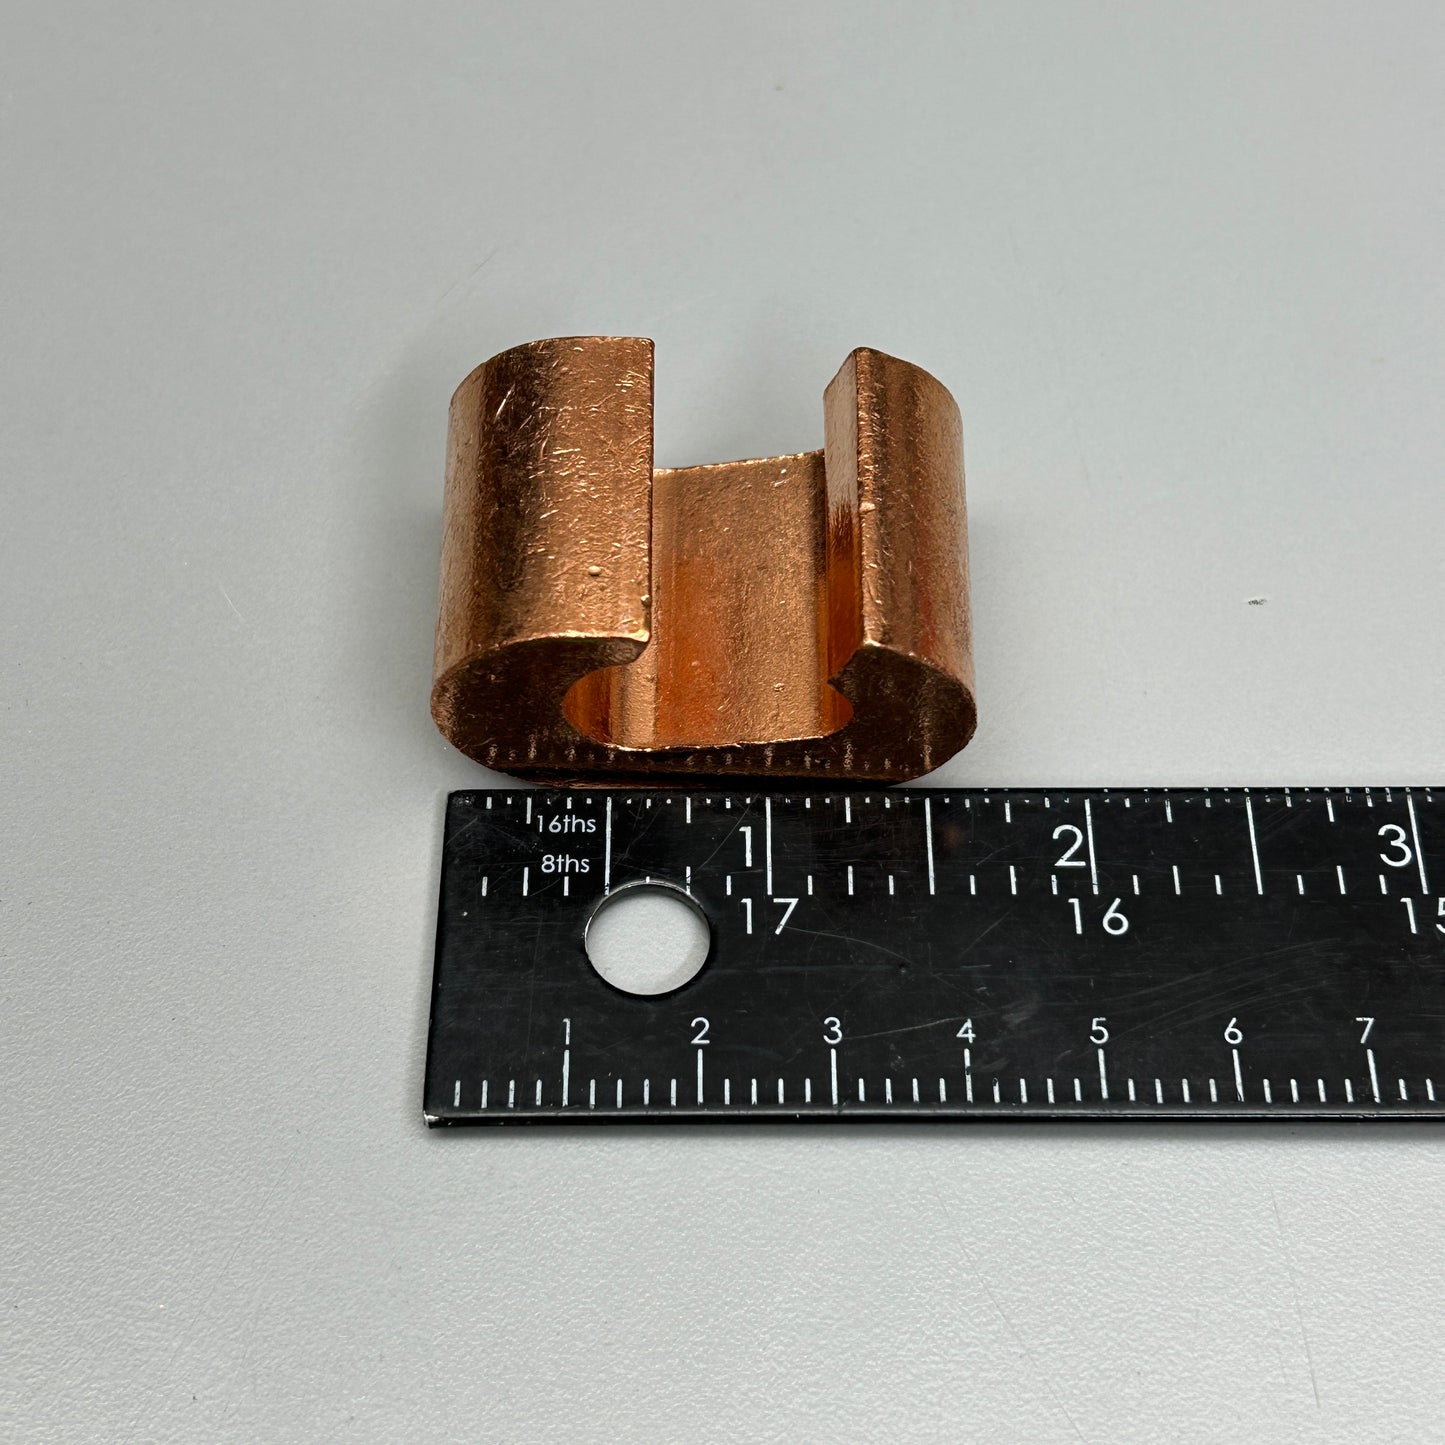 BURNDY 5-PACK Copper Tap Connectors YC28C2 (New)